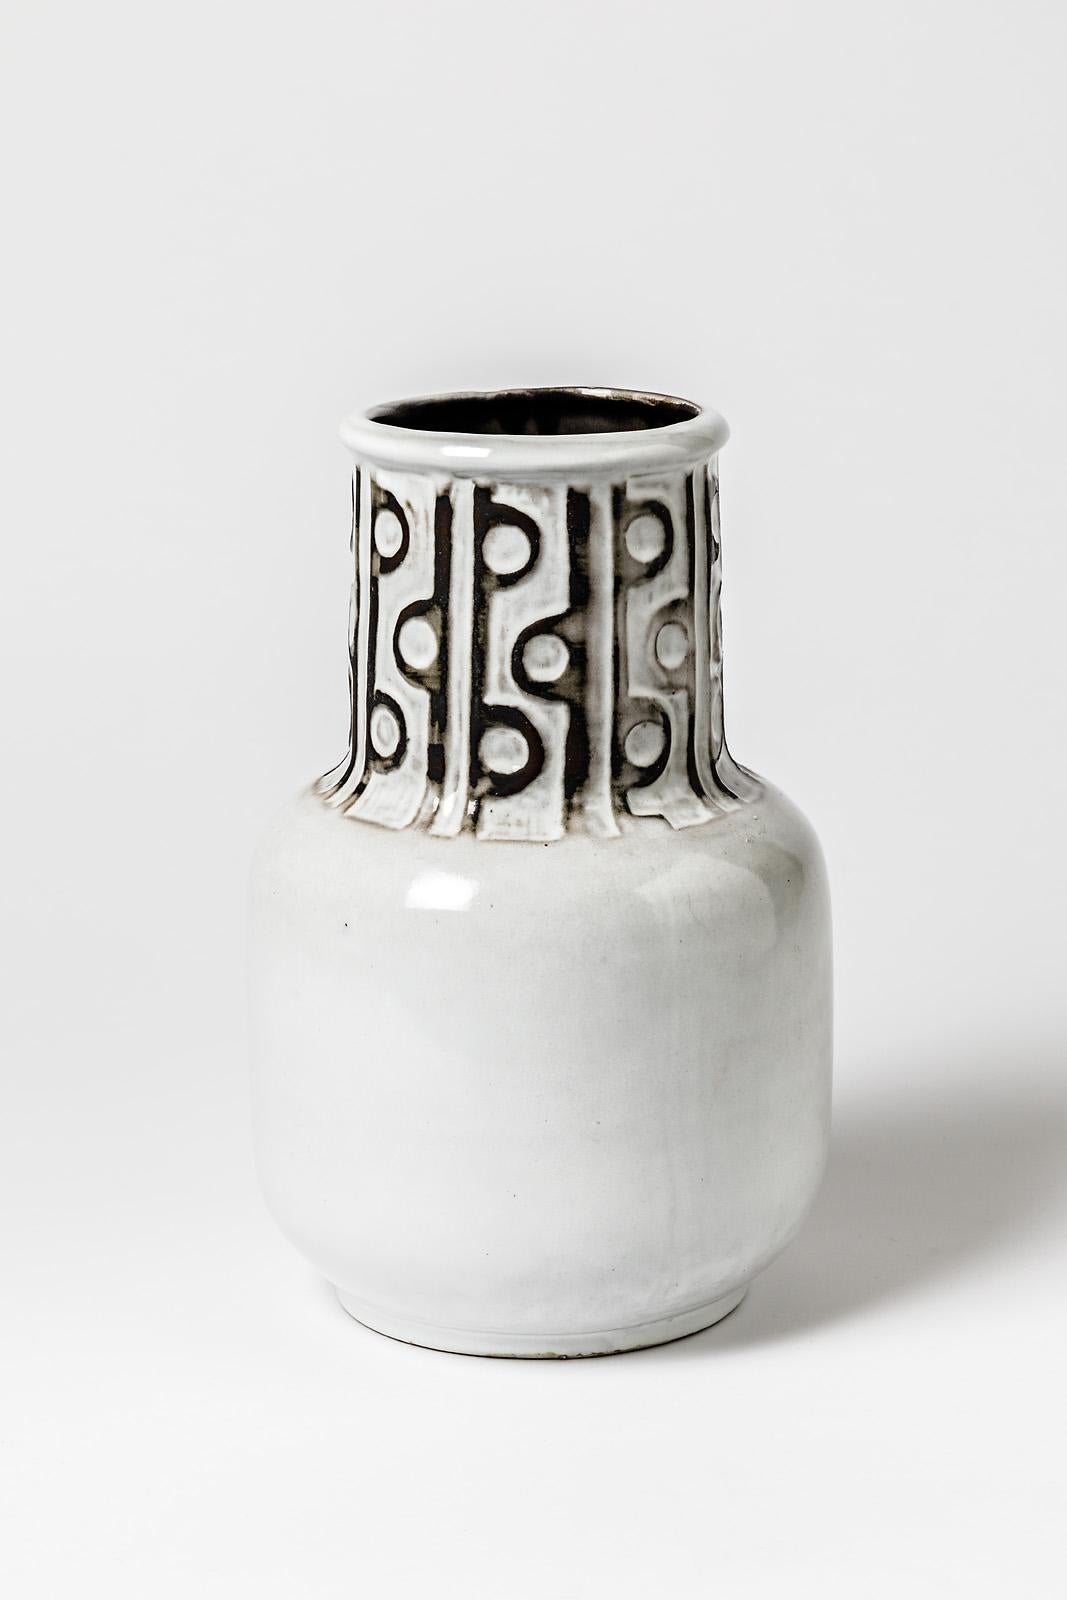 A ceramic vase with black and white glazes decoration.
Signed under the base 